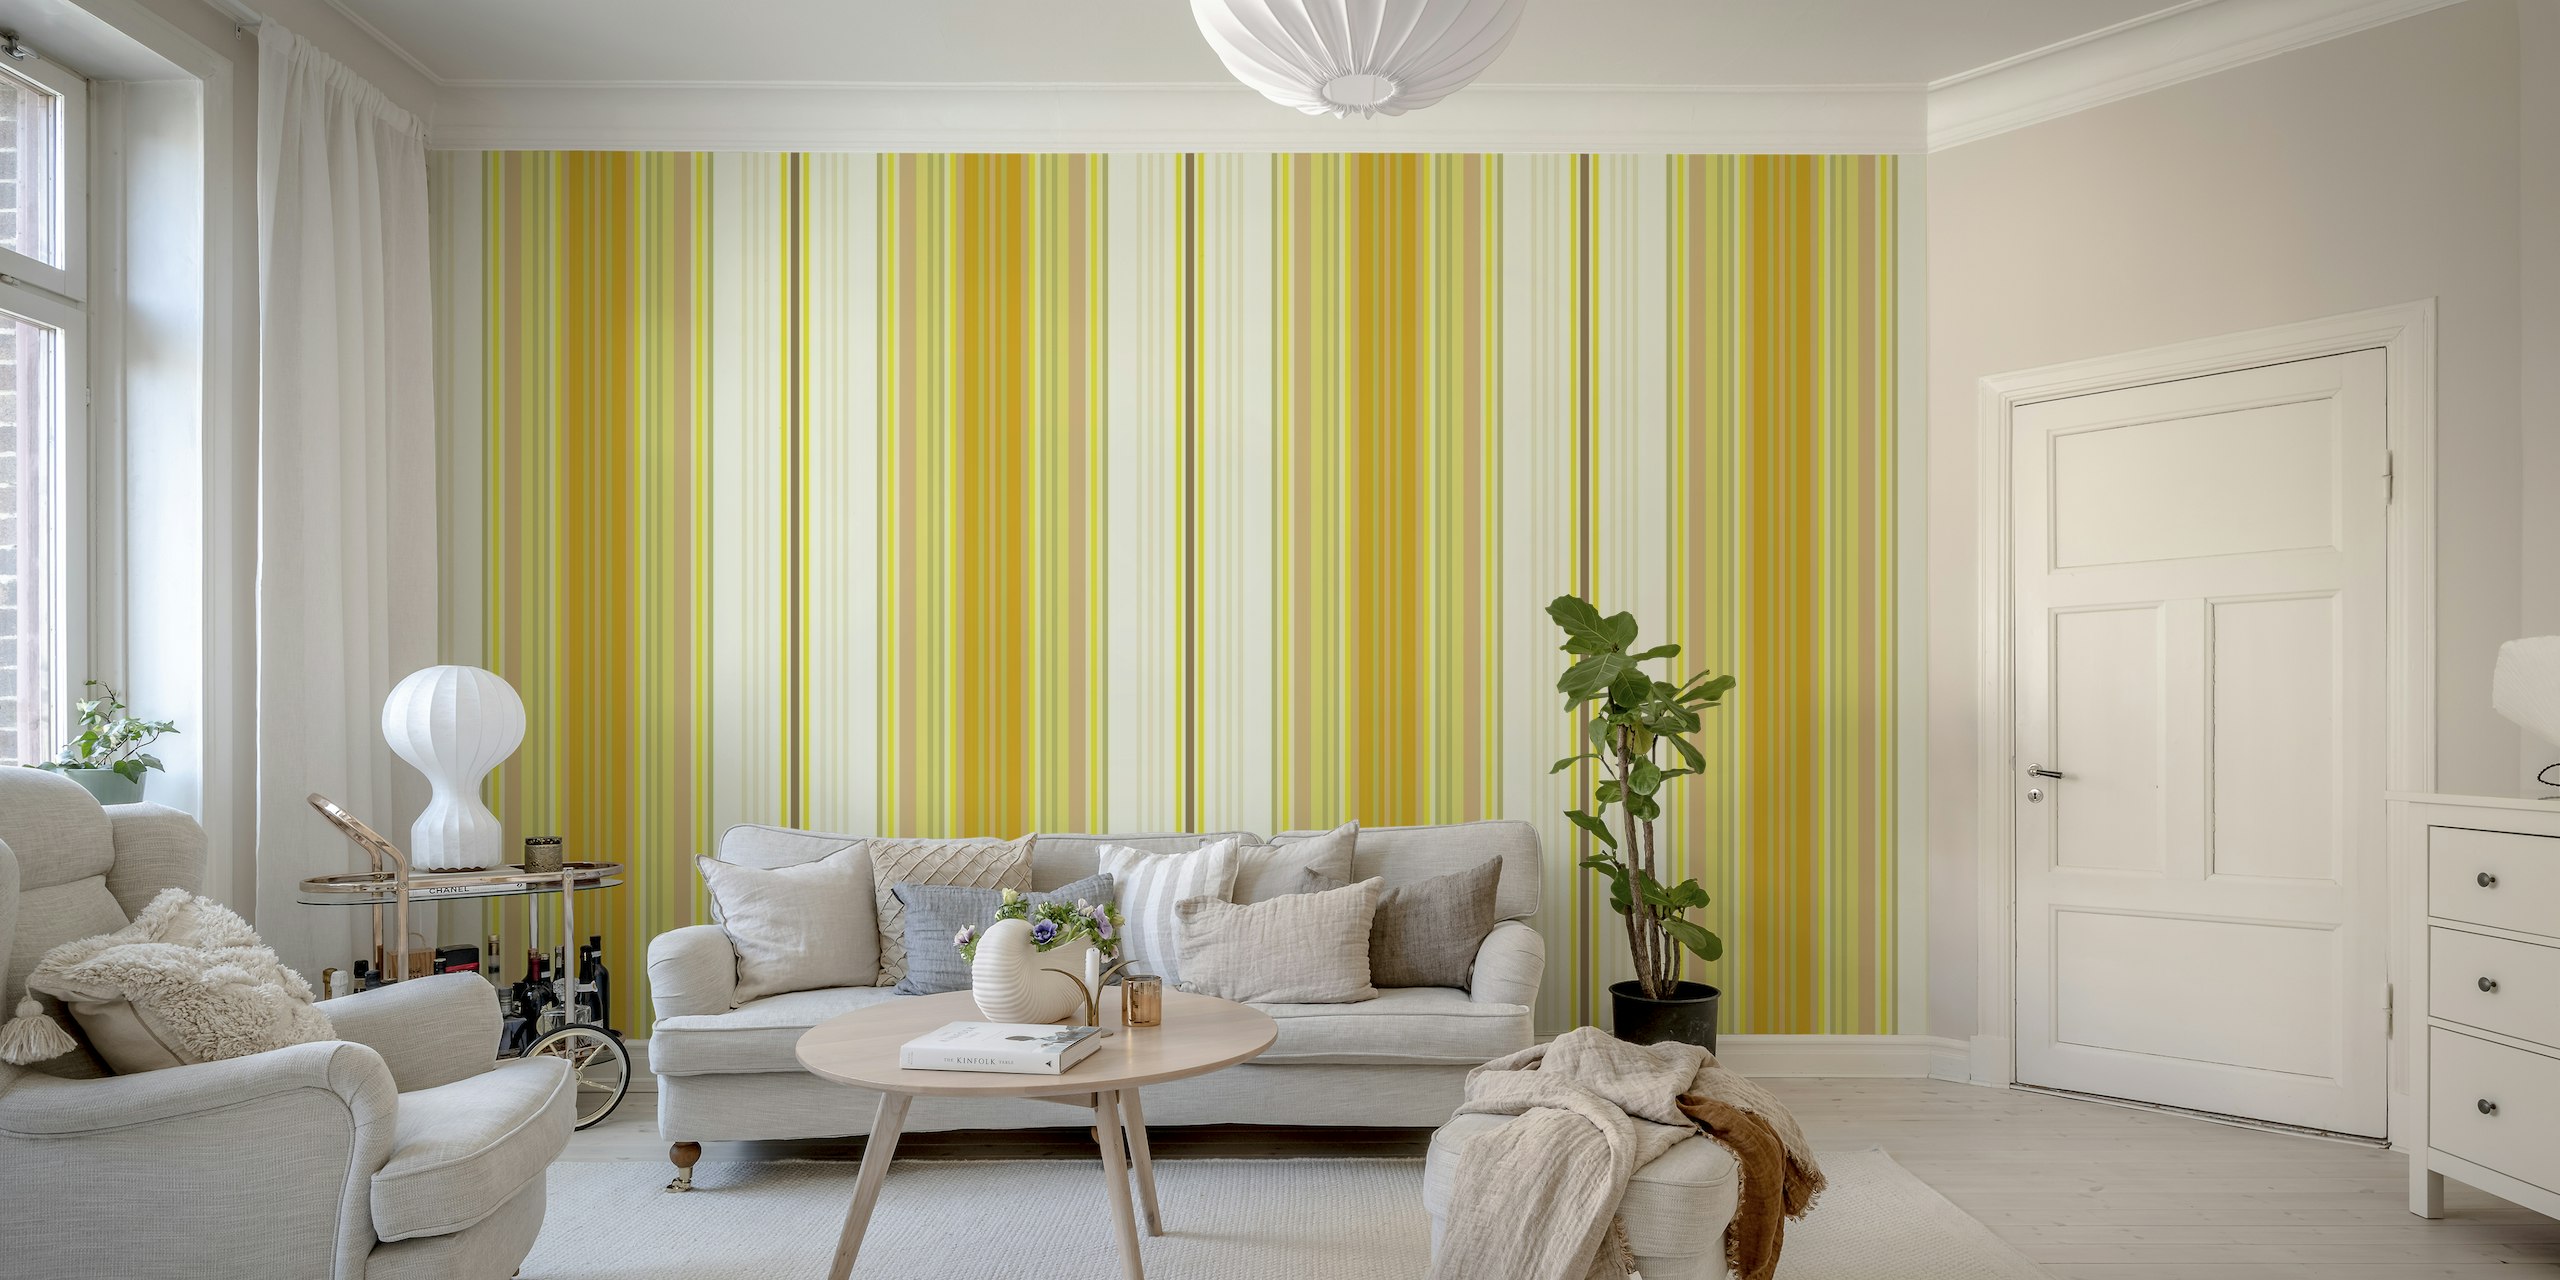 70s striped wallpaper - Gold behang